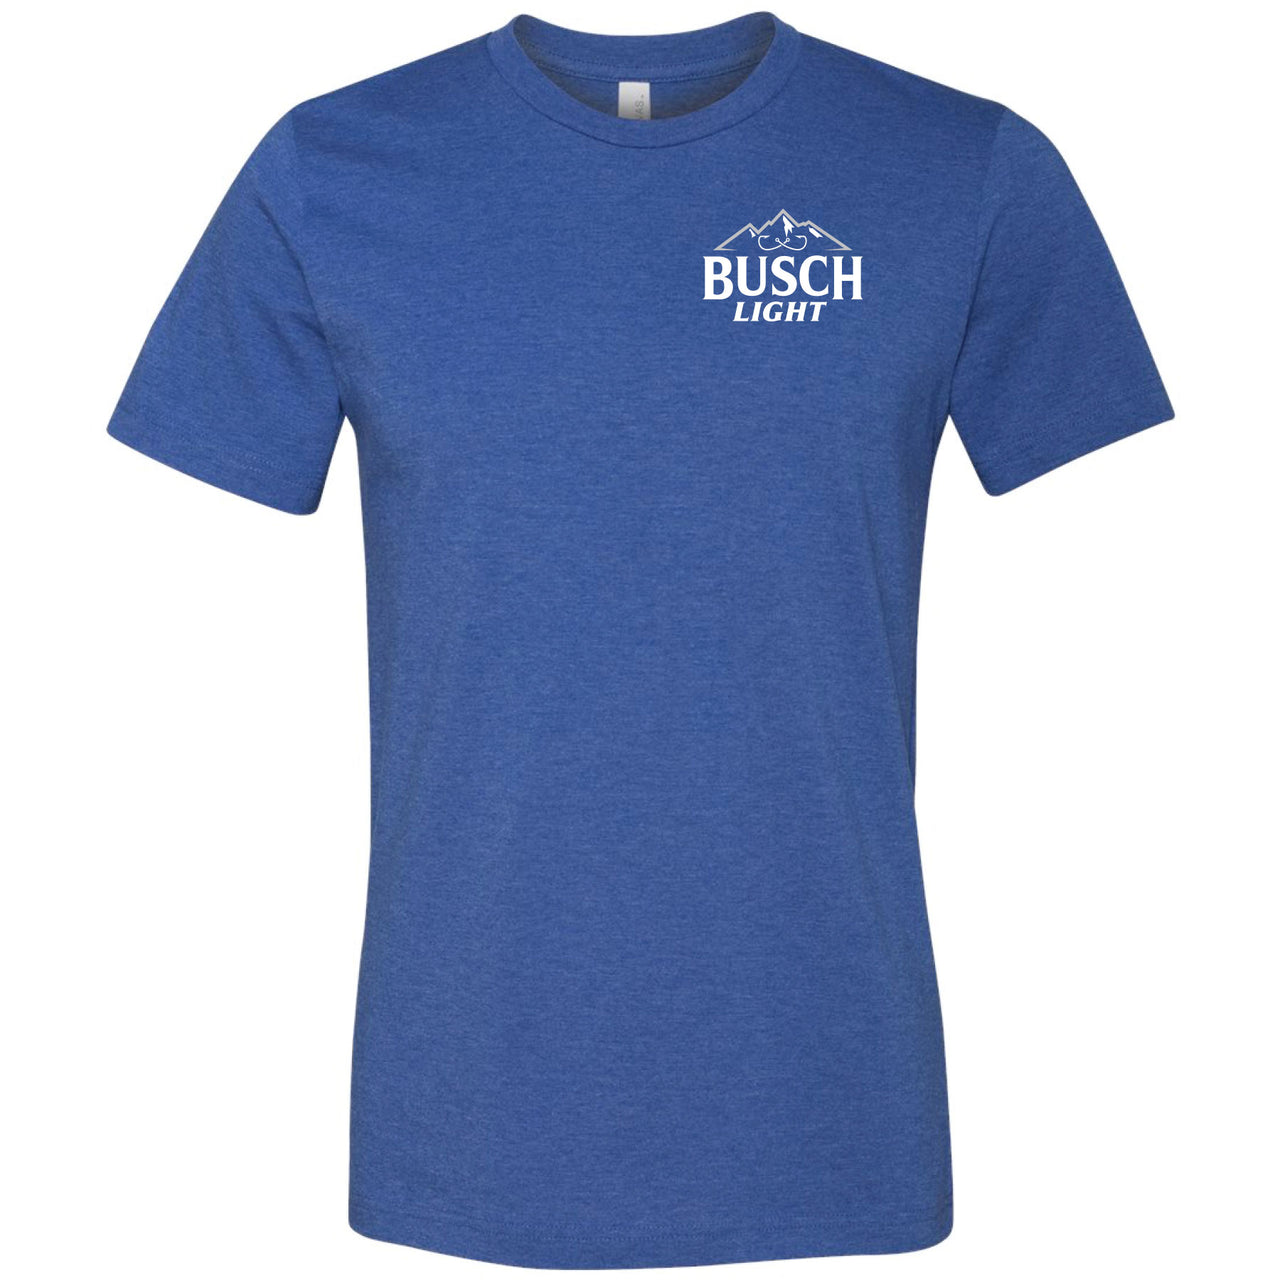 Busch Light Fishing - Gone Fishing For Busch - 2-Sided